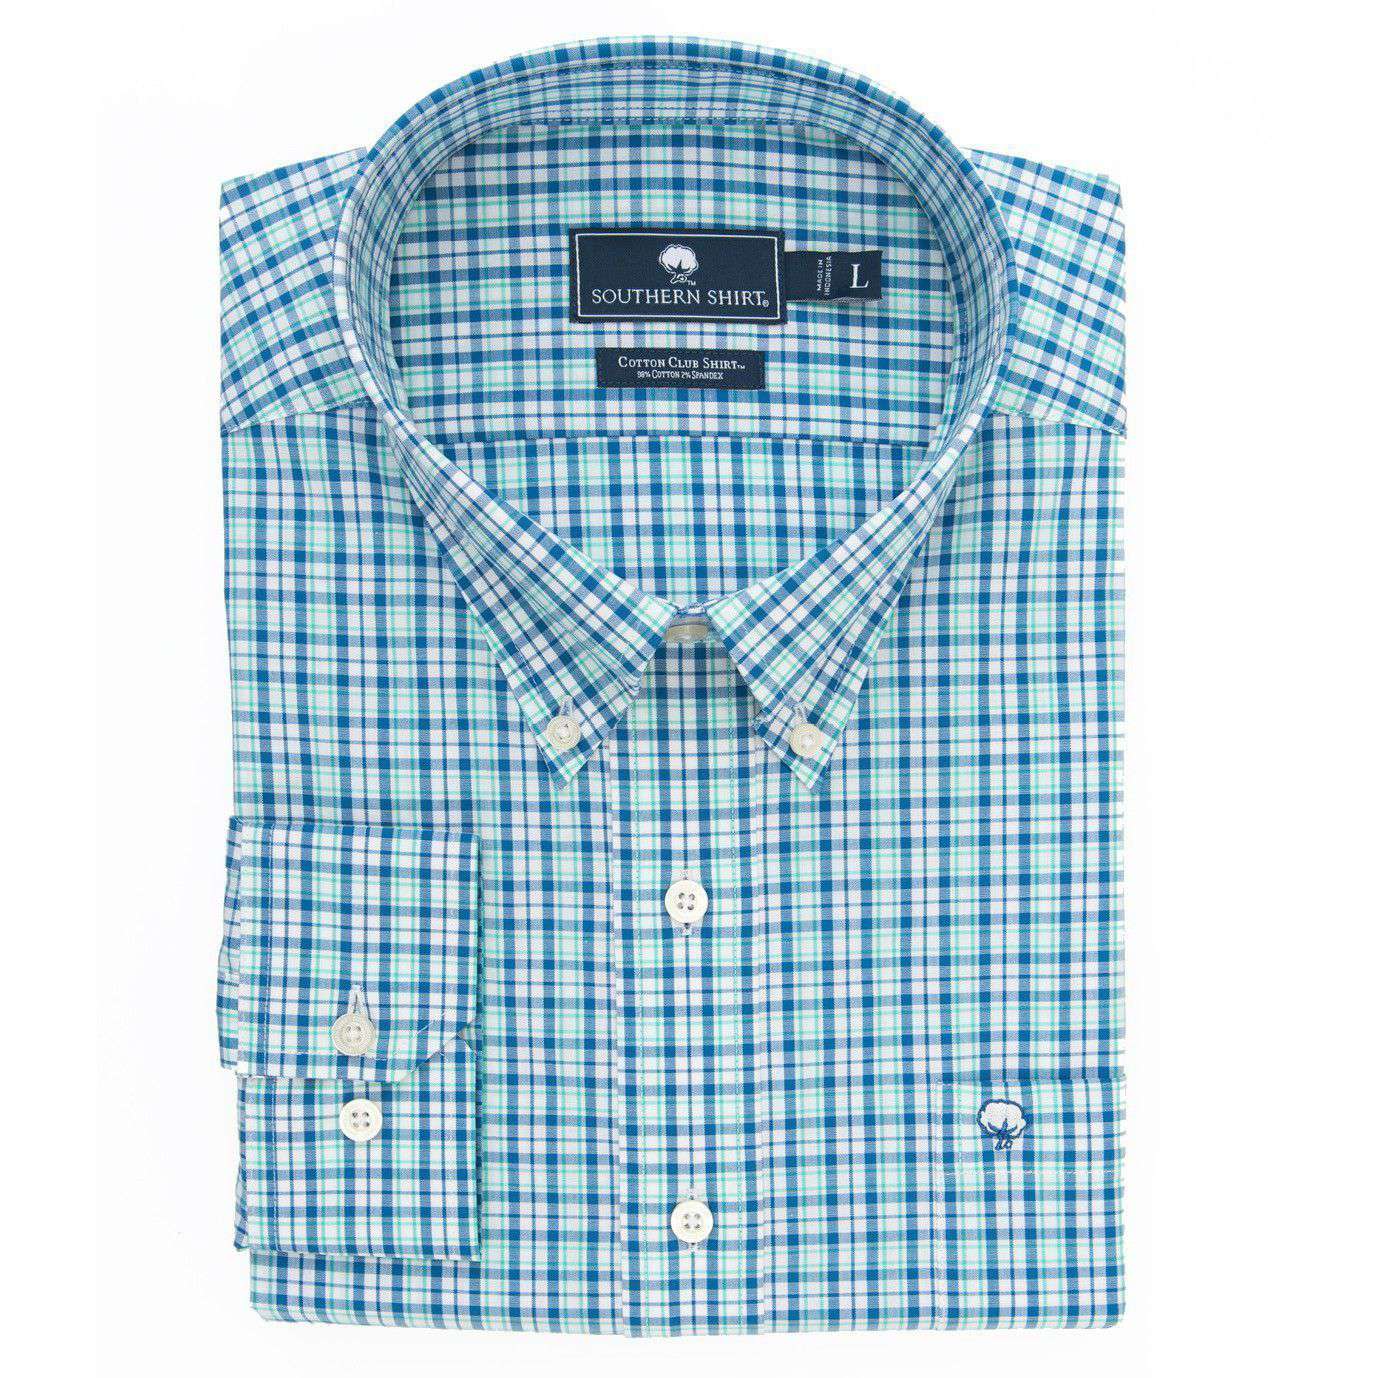 Crawford Plaid Cotton Club Shirt in Regatta Blue by The Southern Shirt Co. - Country Club Prep